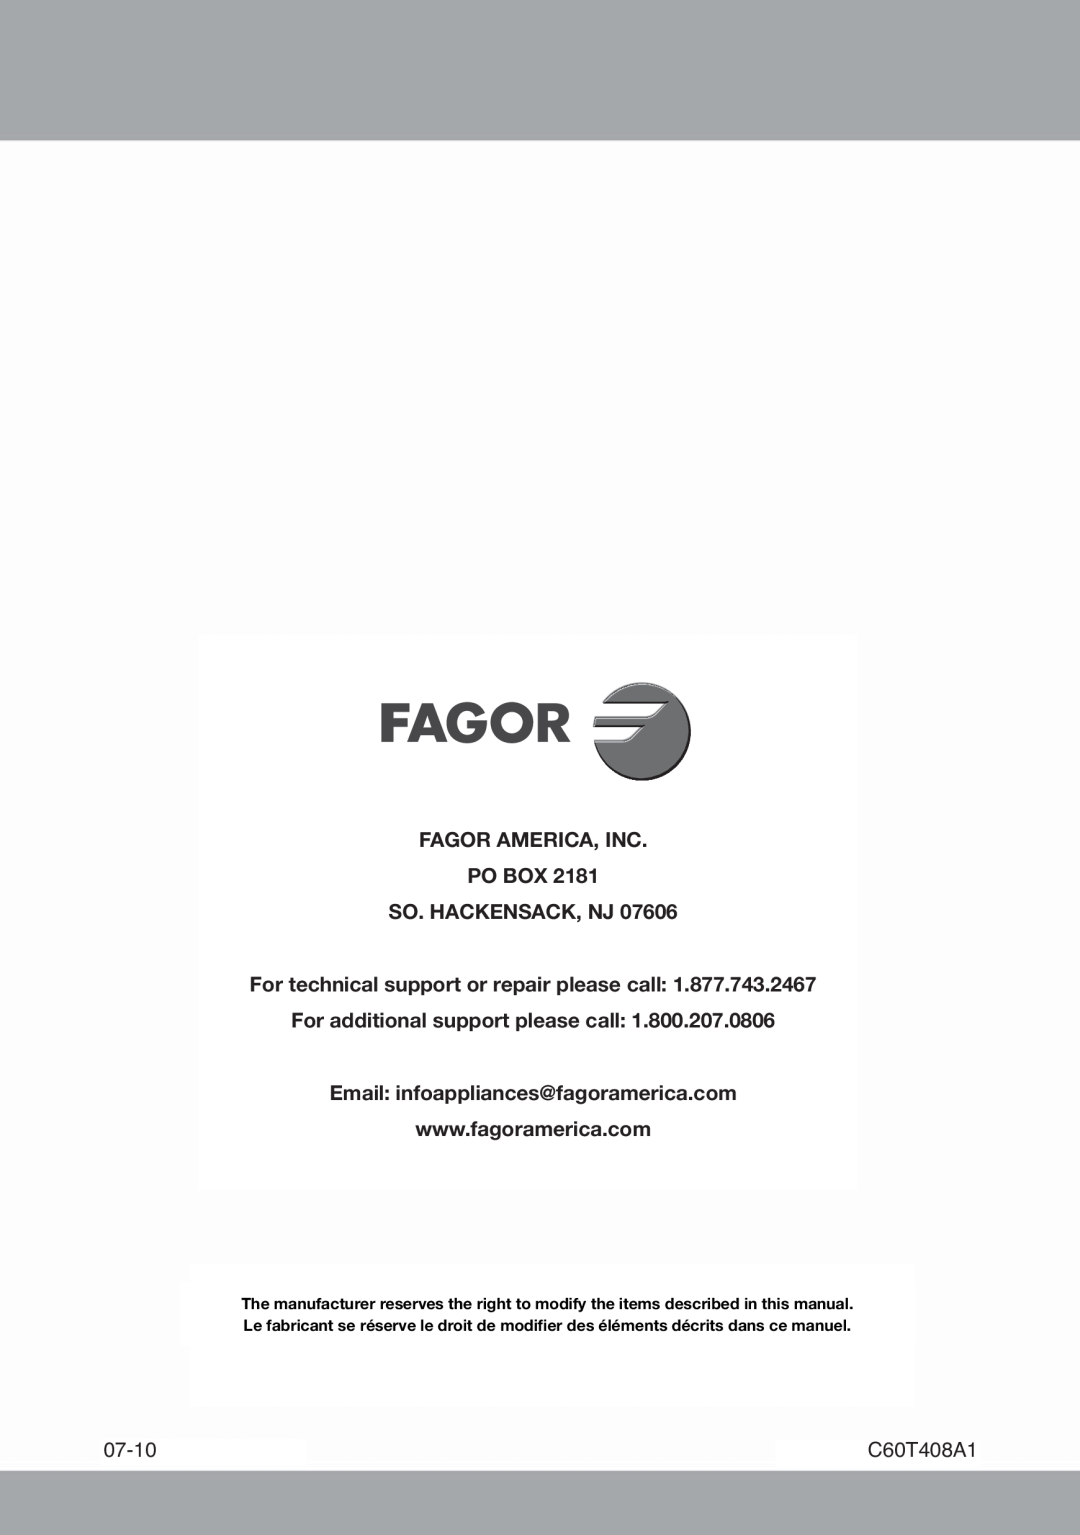 Fagor America 6HA-196BX Fagor America, Inc Po Box So. Hackensack, Nj, For technical support or repair please call, 07-10 